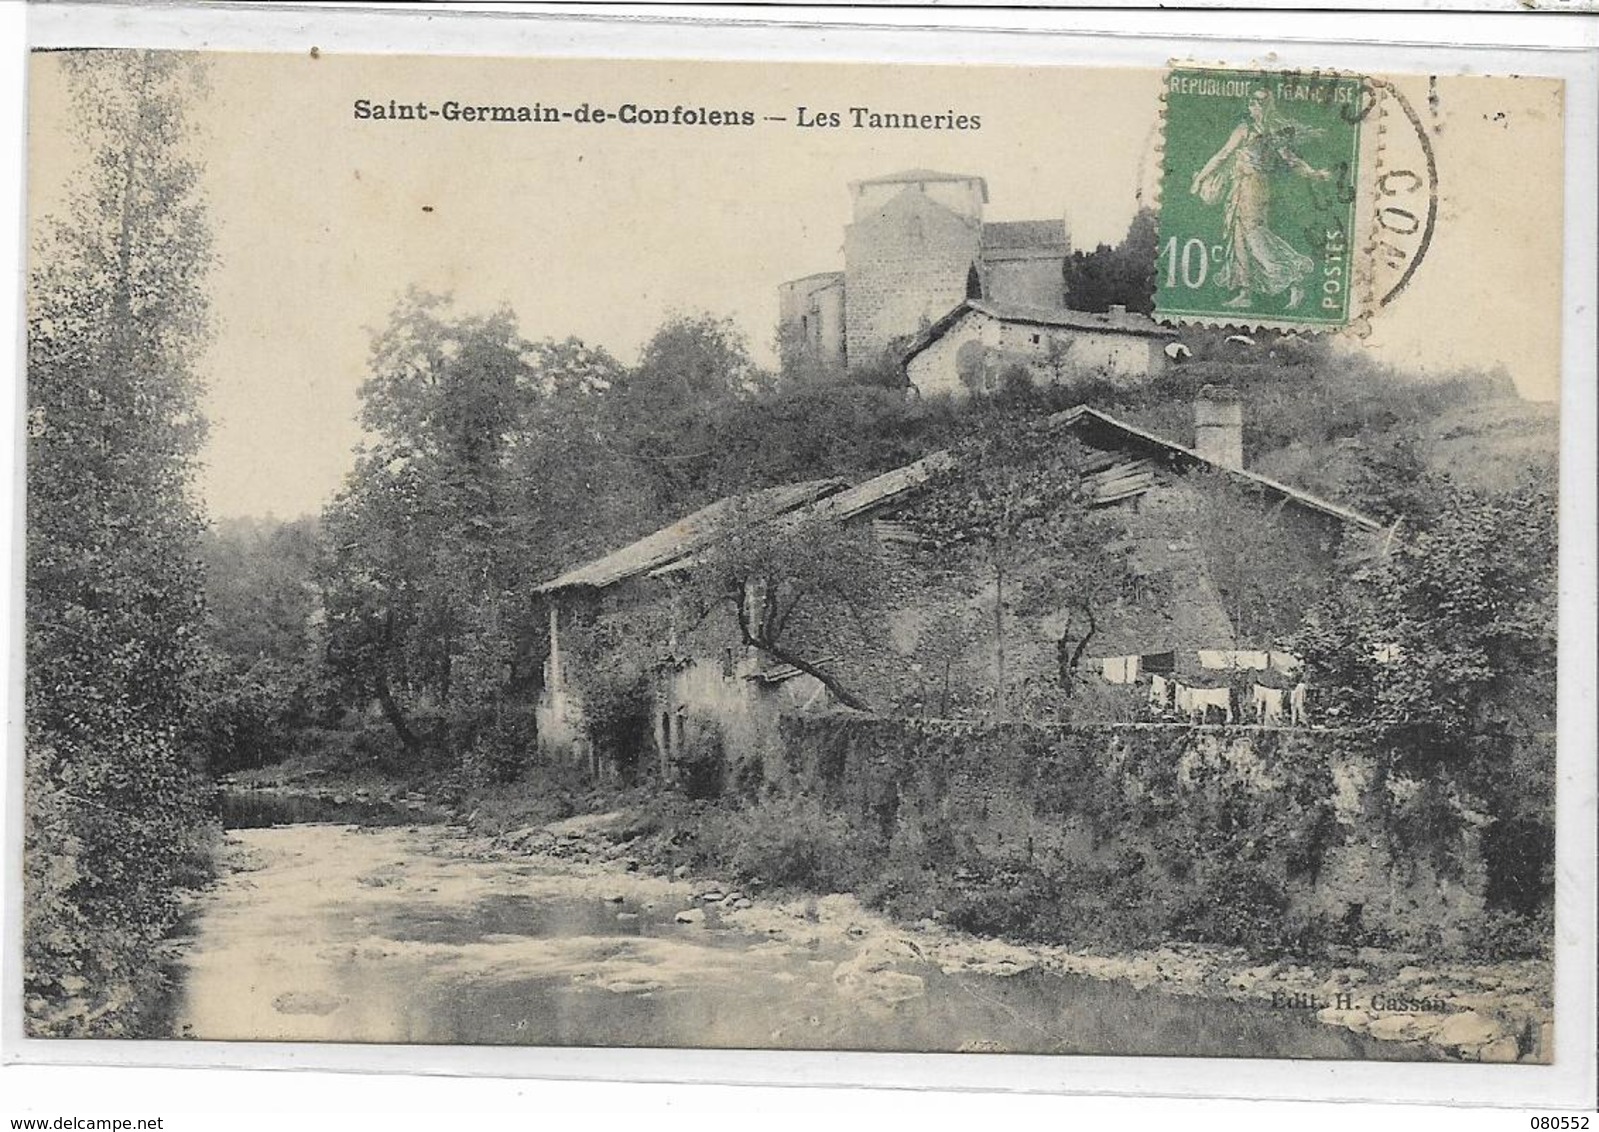 16 LOT 1 de 8 belles cartes de Charente , état extra